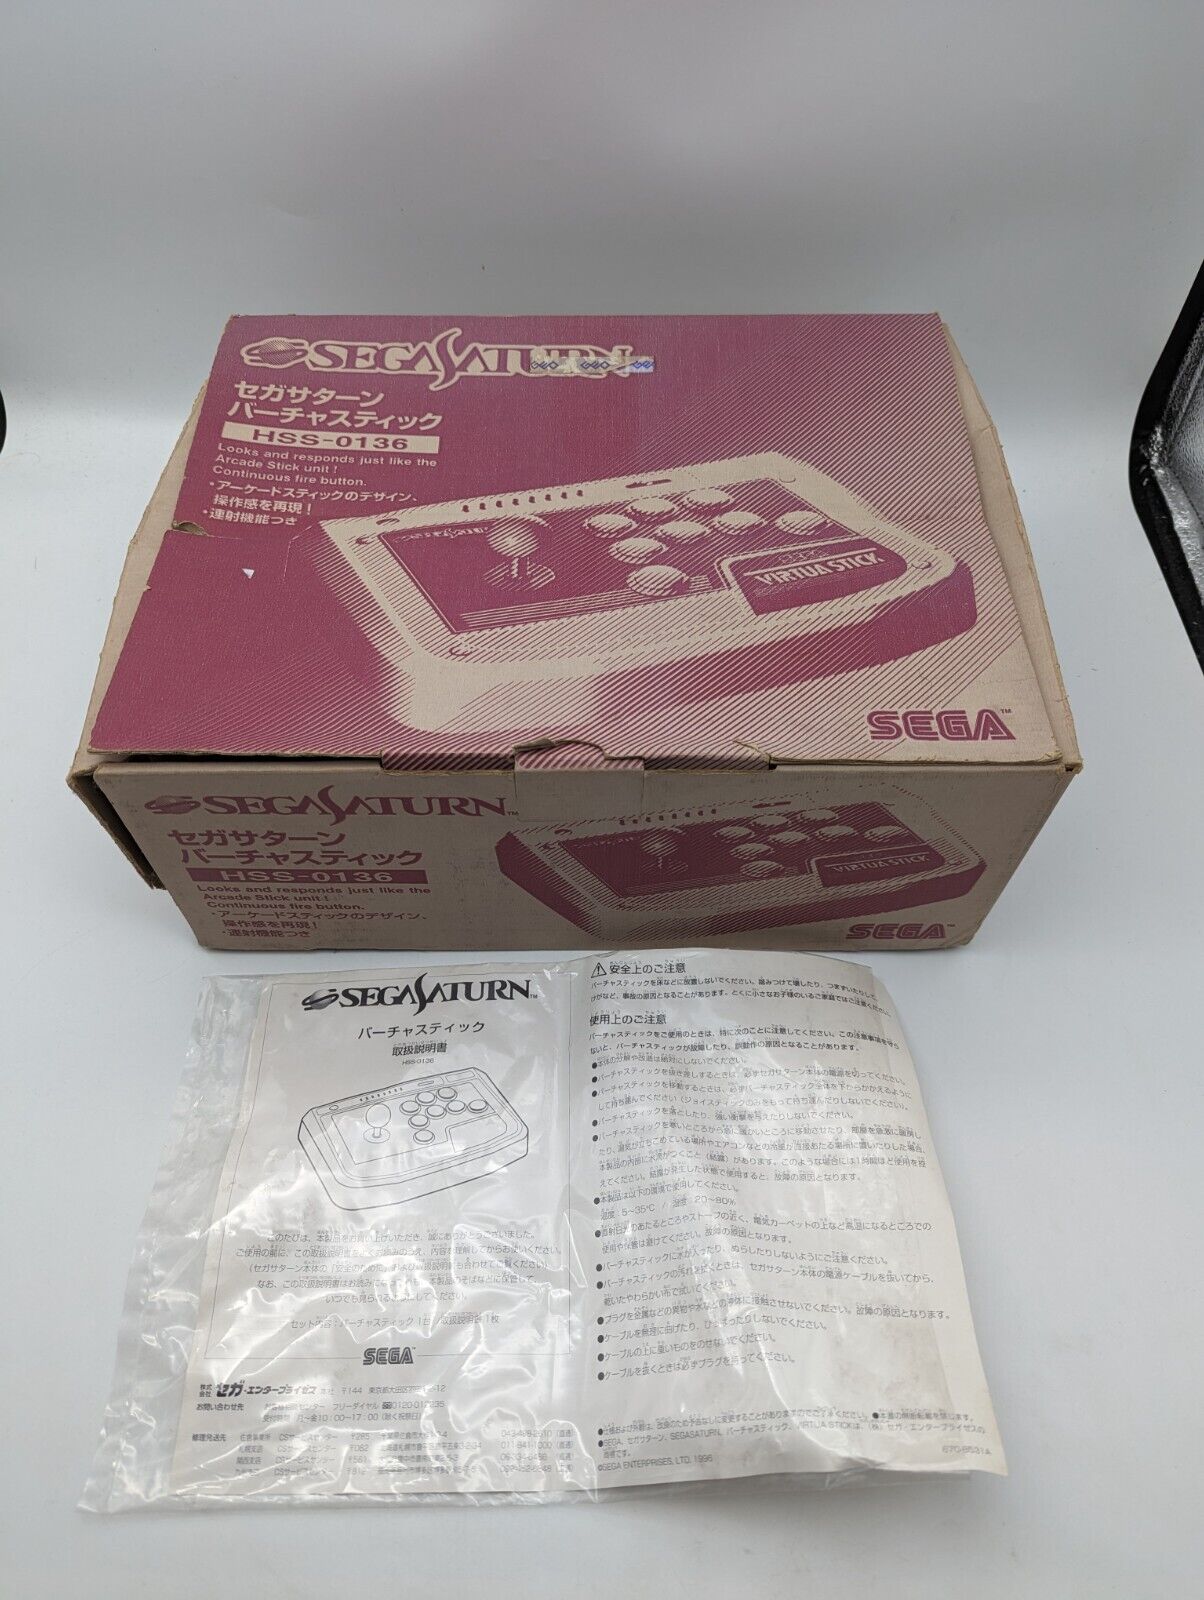 Sega Virtua Stick HSS-0136 Controller Saturn w/ Box , Manual Japan USED